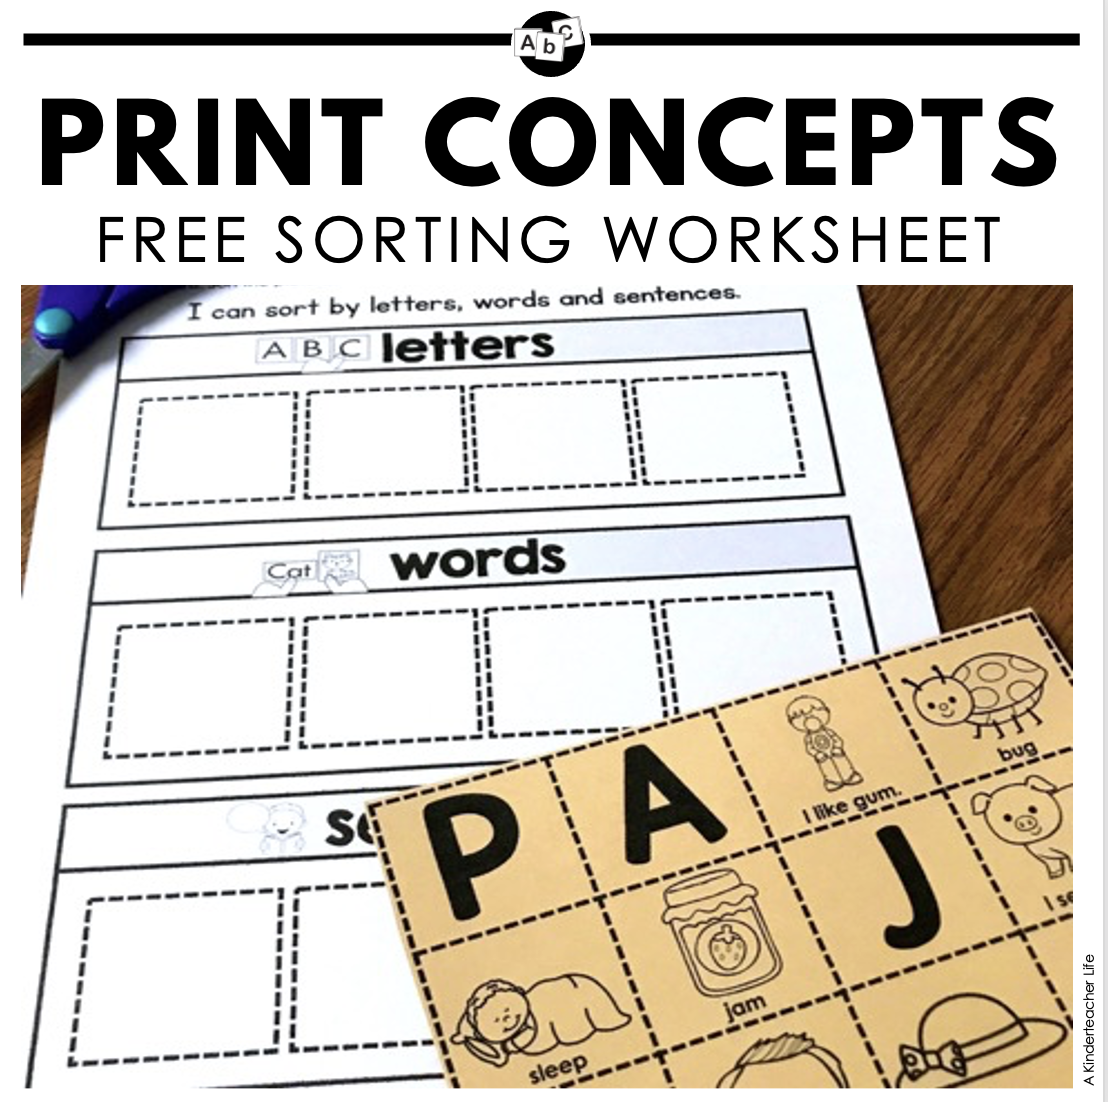 Print Concepts Sort Worksheets